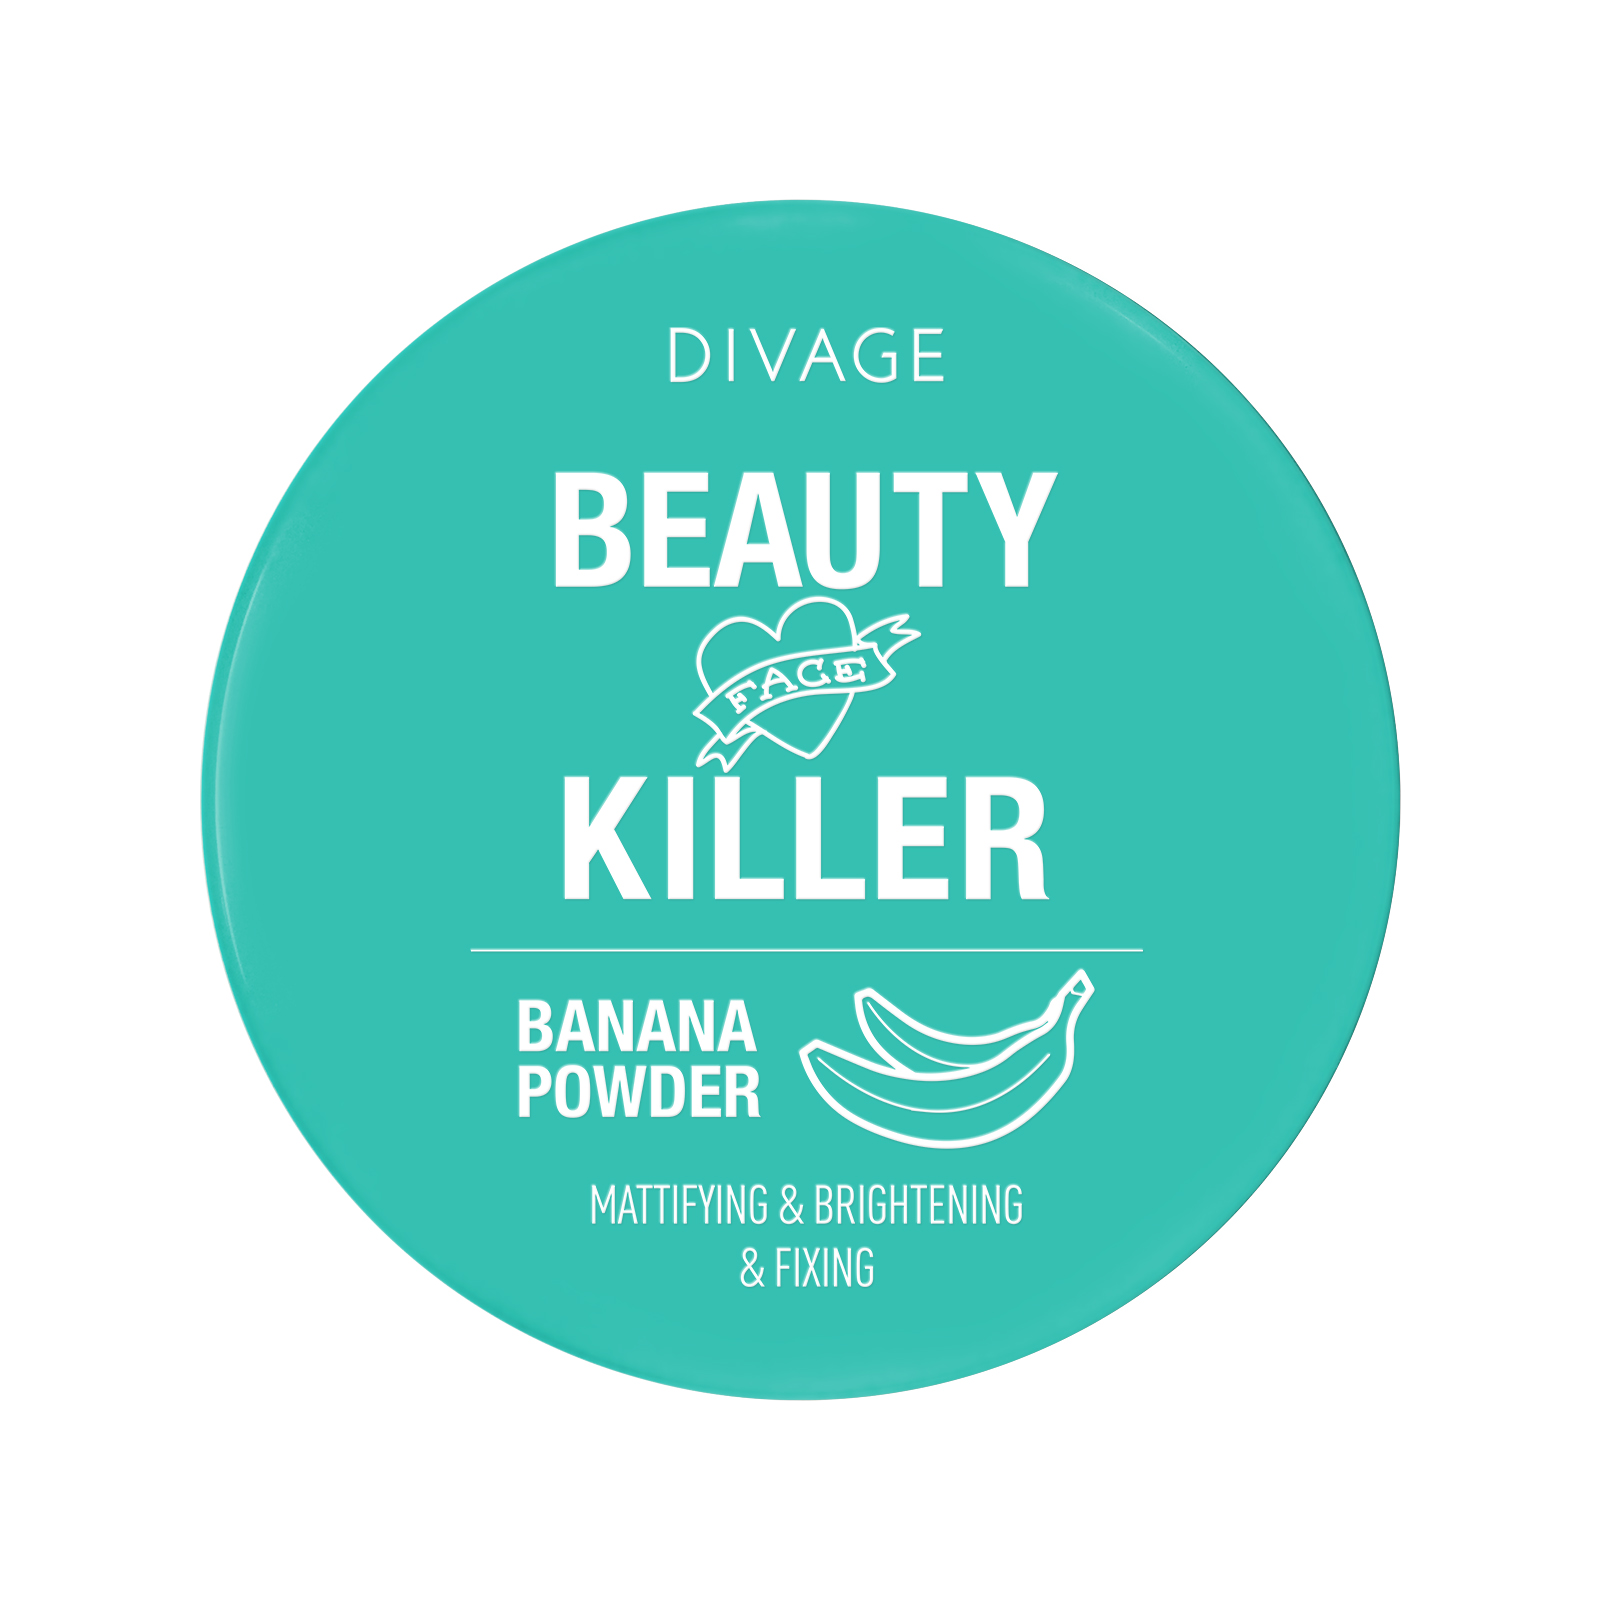 Divage killer пудра. Divage Beauty Killer пудра. Divage пудра Banana Powder. Divage | Beauty Killer Banana Powder 01. Диваж пудра 1 тон.